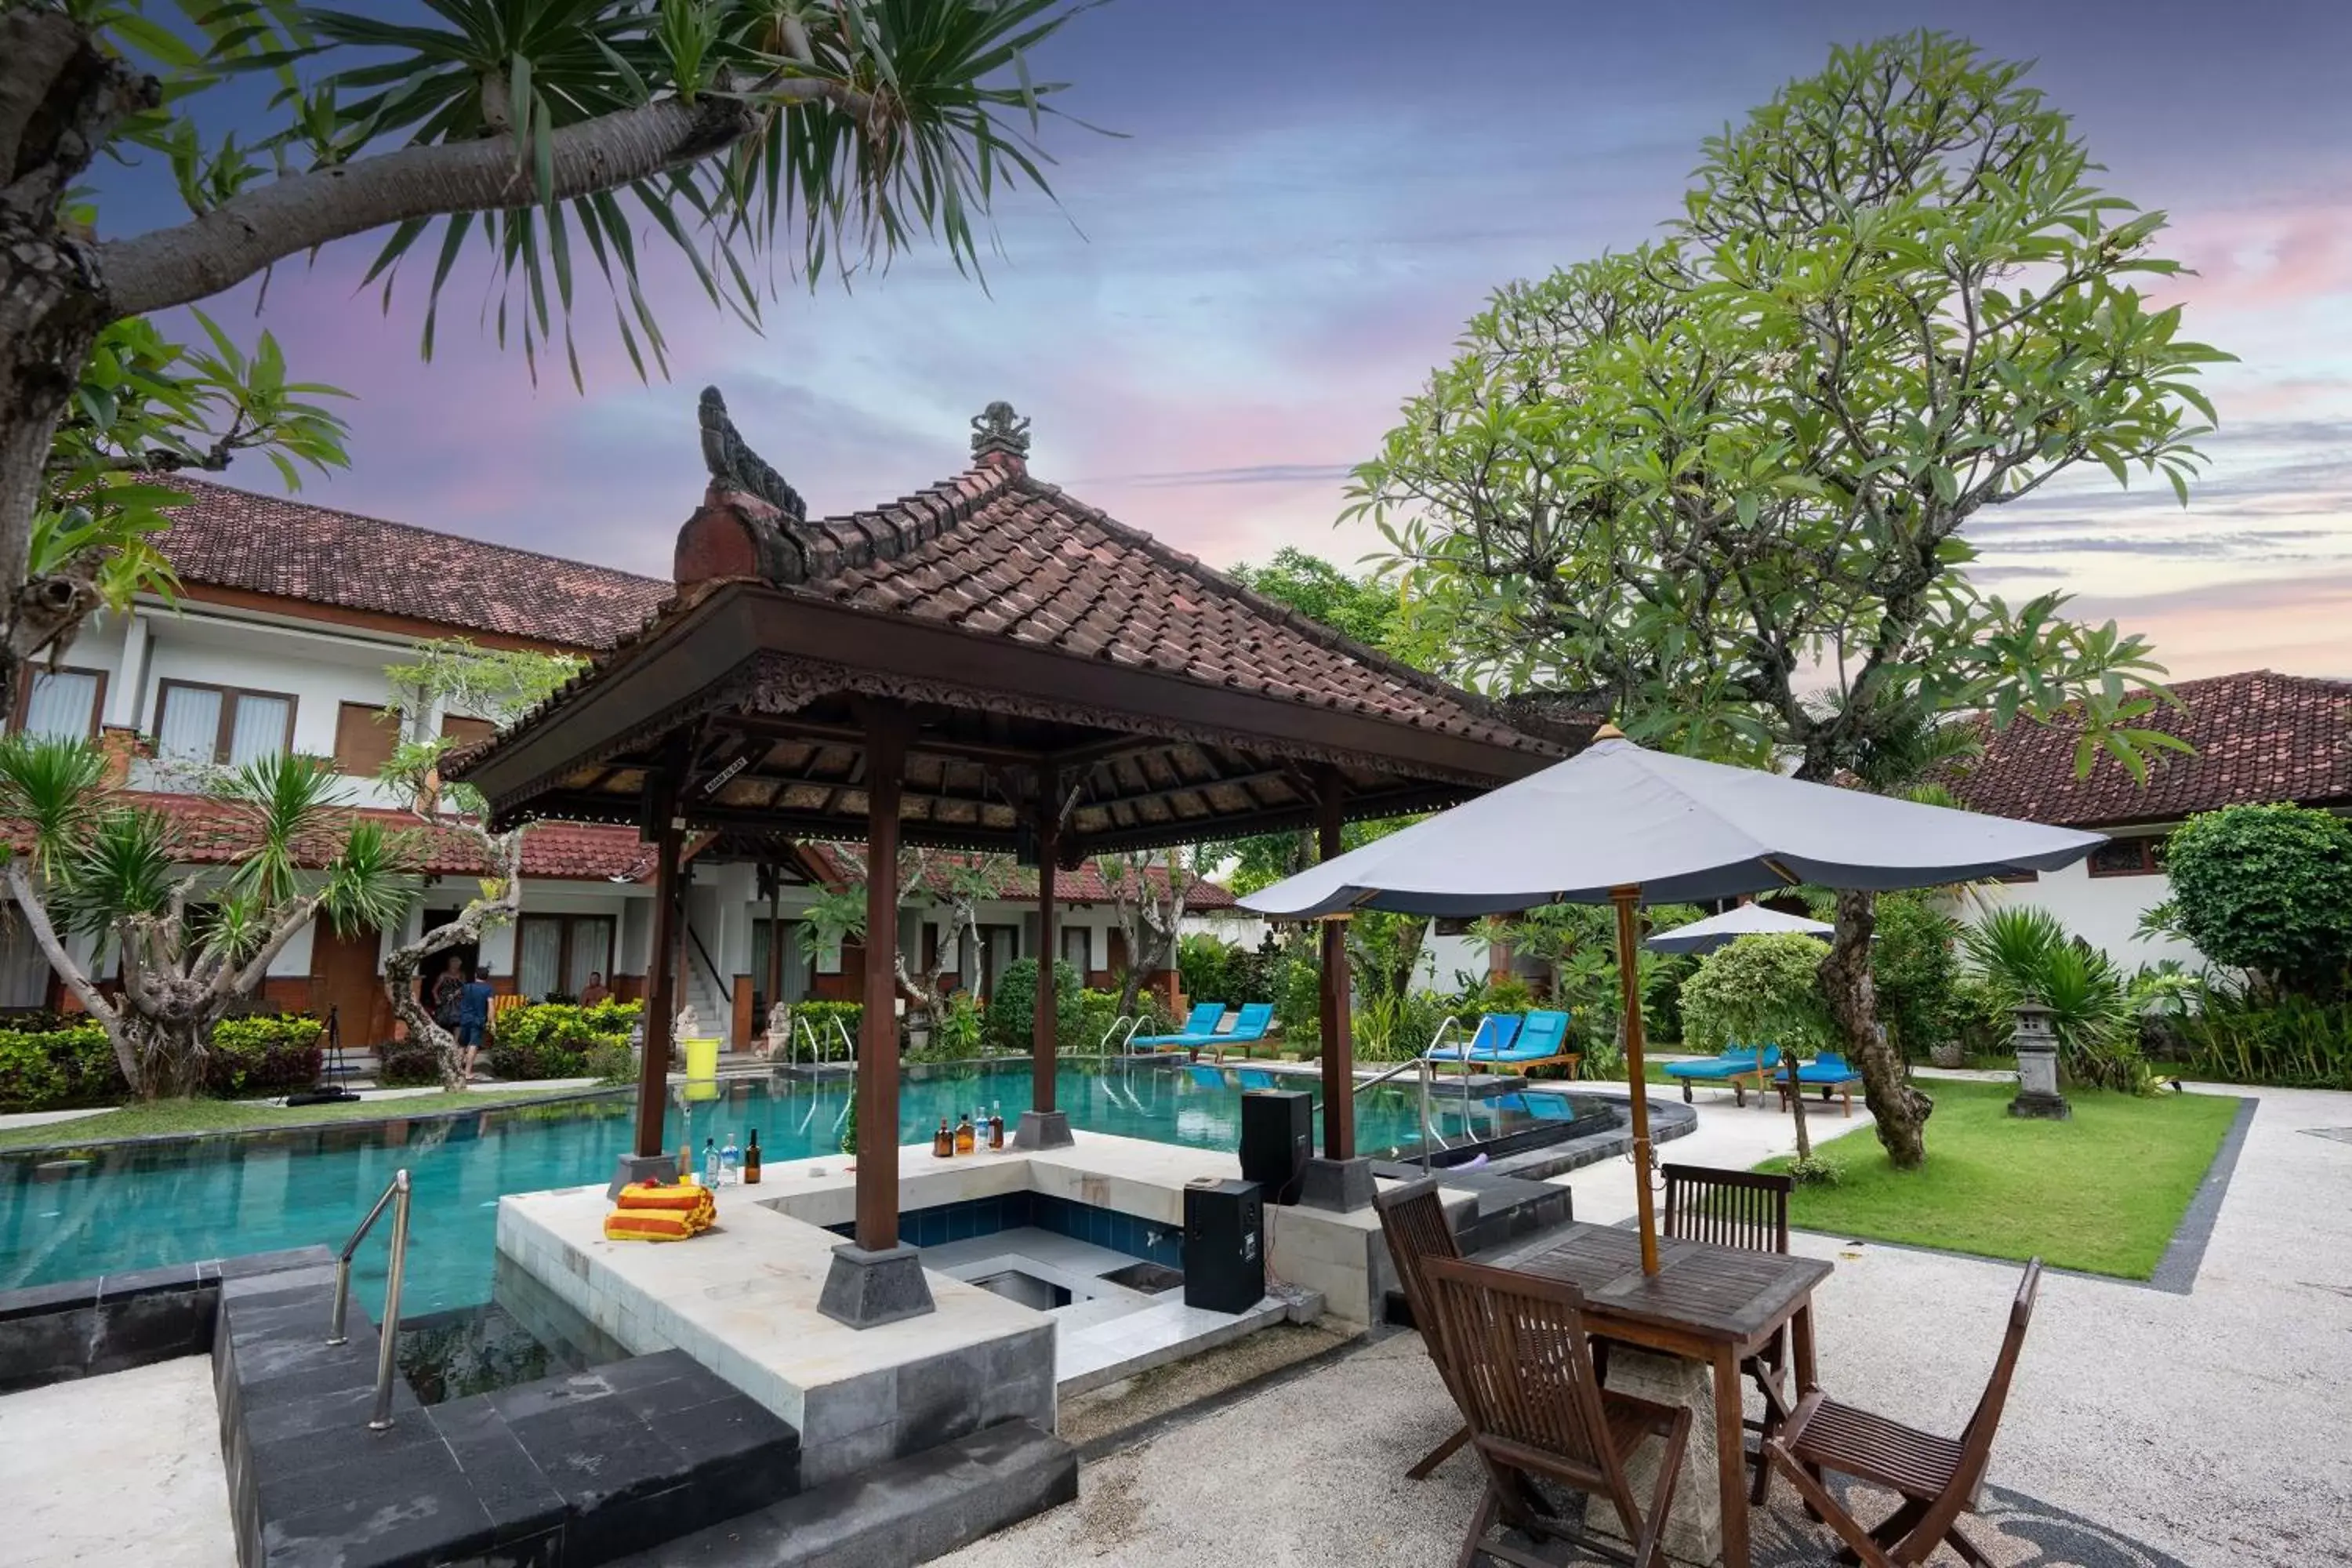 Swimming Pool in Sinar Bali Hotel